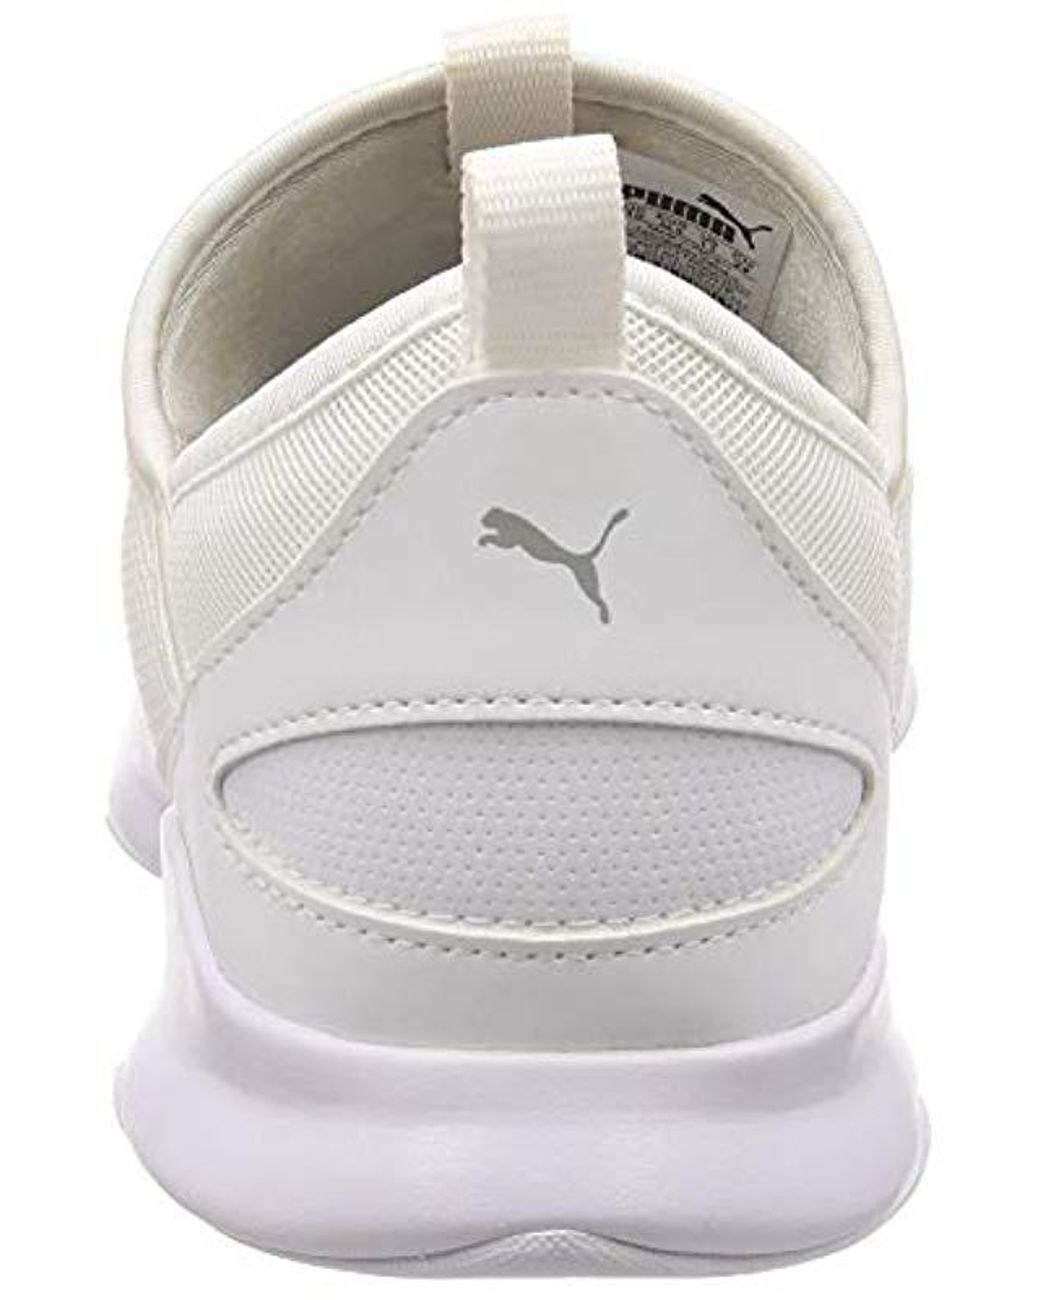 Buy Puma Unisex-Adult Dare Black-White Sneaker - 7 UK (36369901) at  Amazon.in